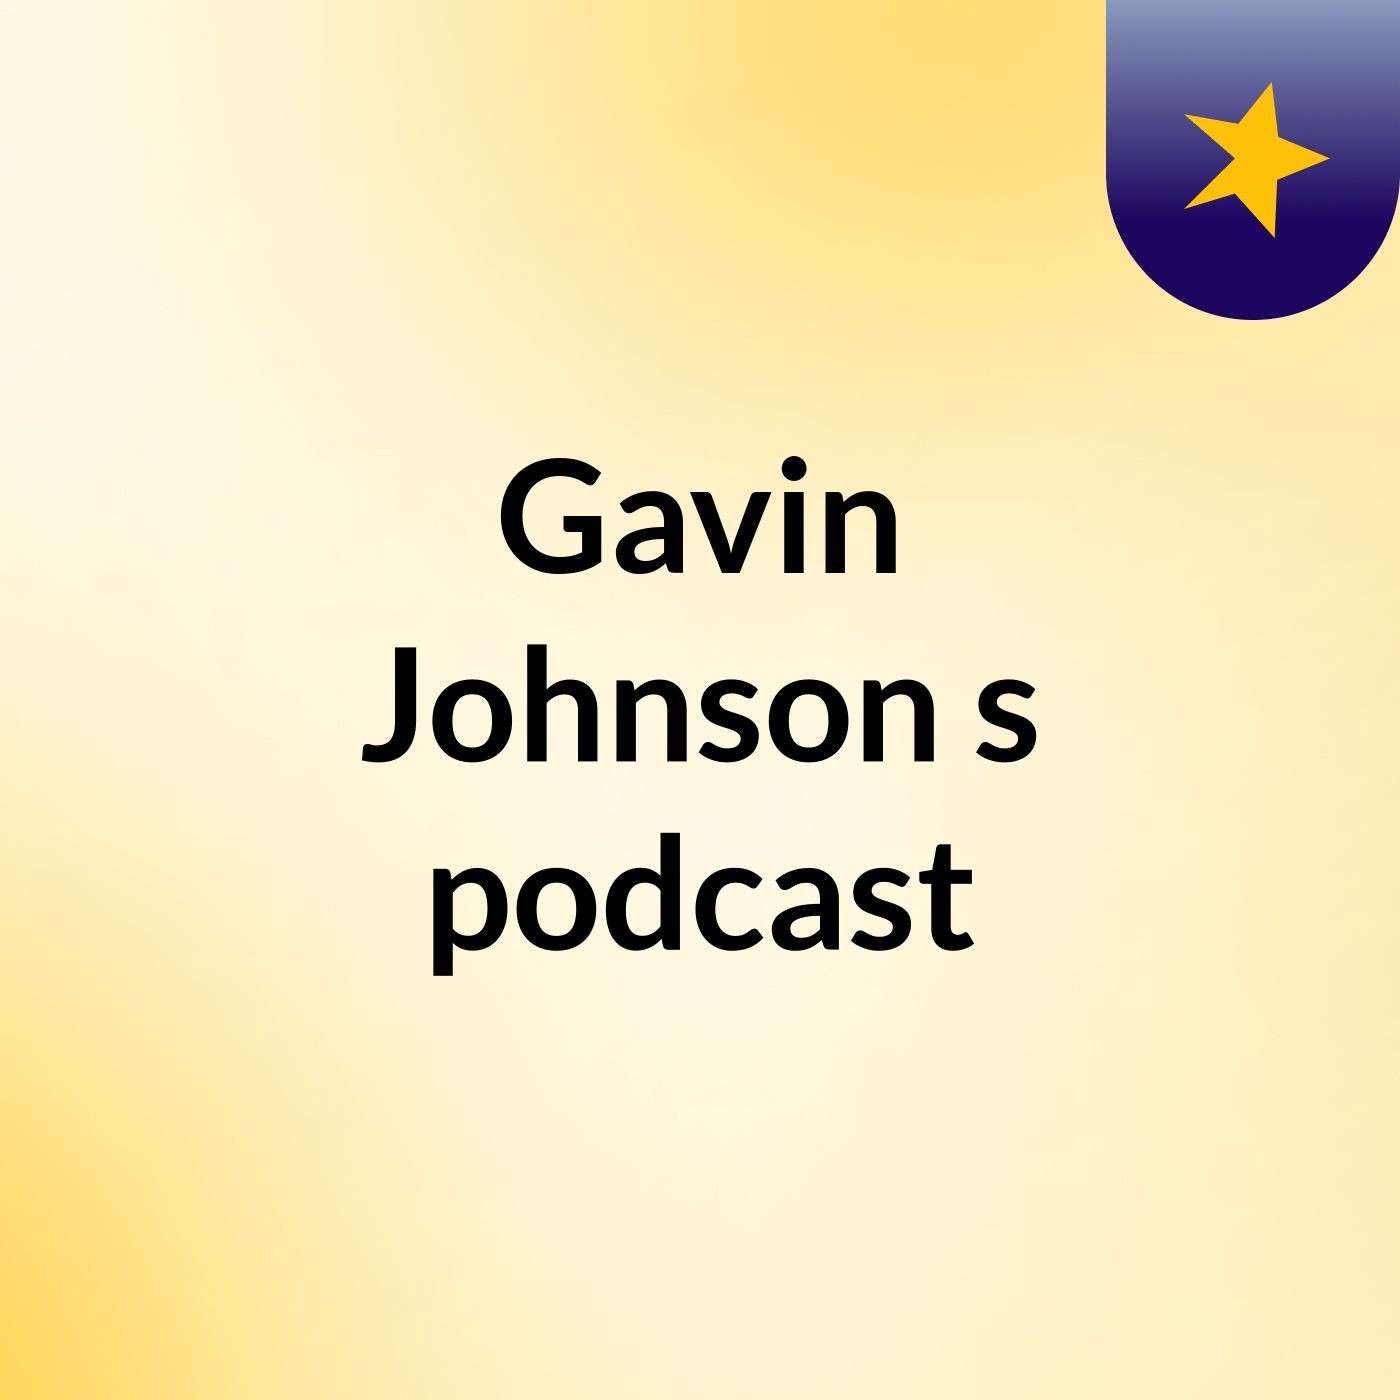 Gavin Johnson's podcast